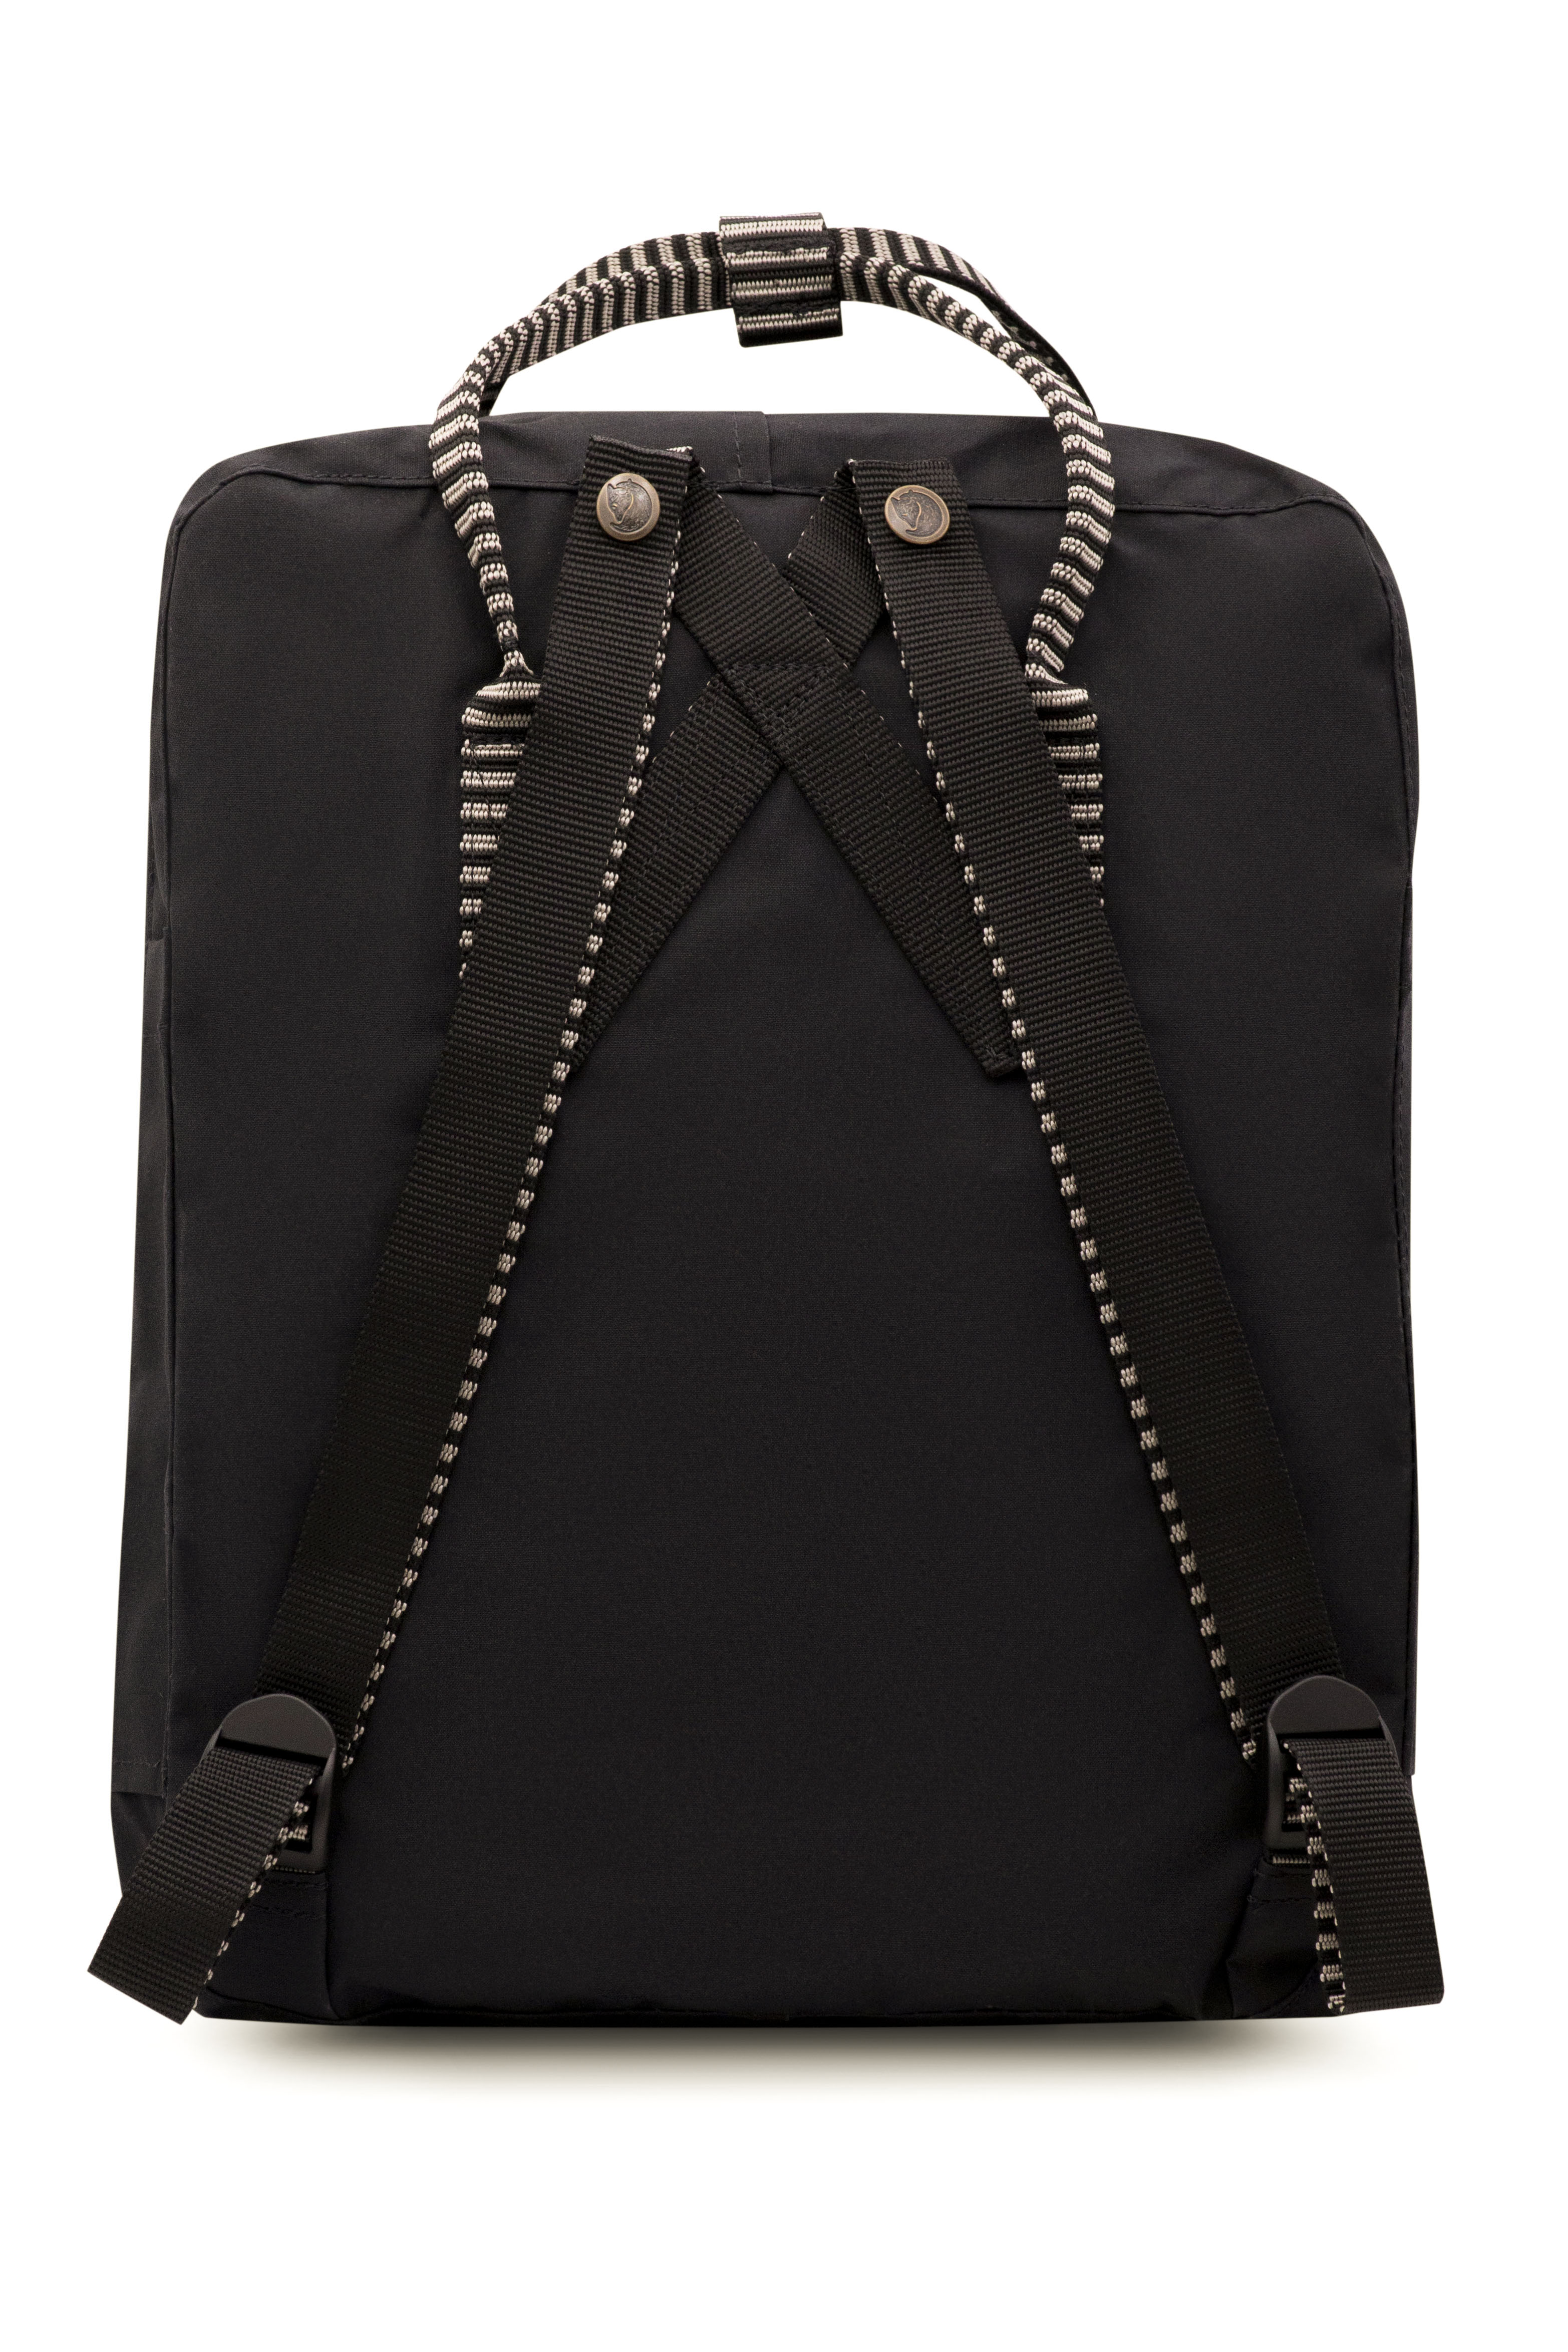 Fjallraven - Kanken Classic Backpack for Everyday - Black/Striped ...